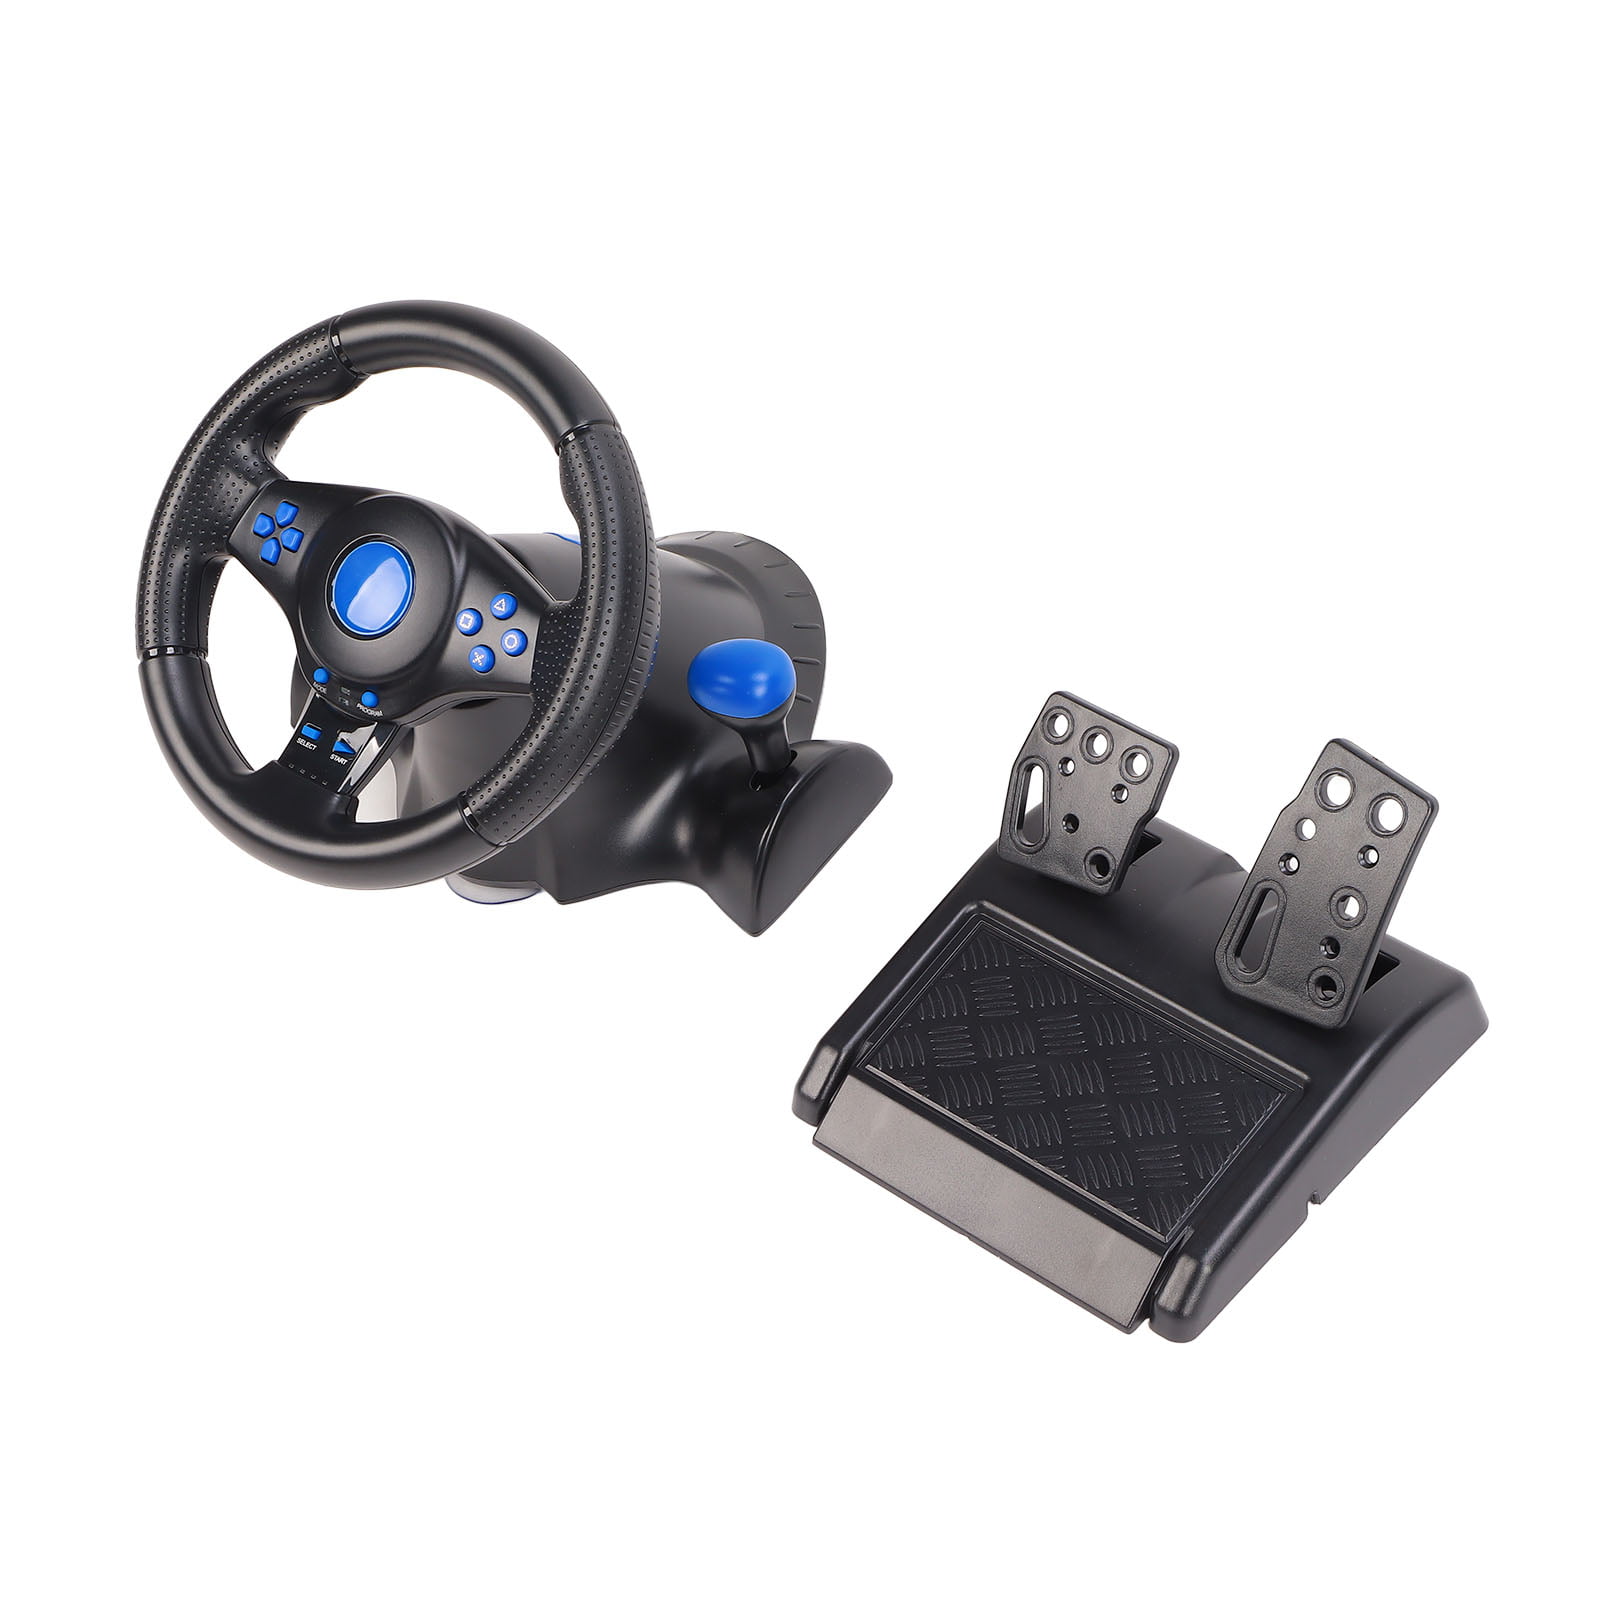 Bundle - PS4, PS3, N64, SNES, Logitech G27 steering wheel - electronics -  by owner - sale - craigslist